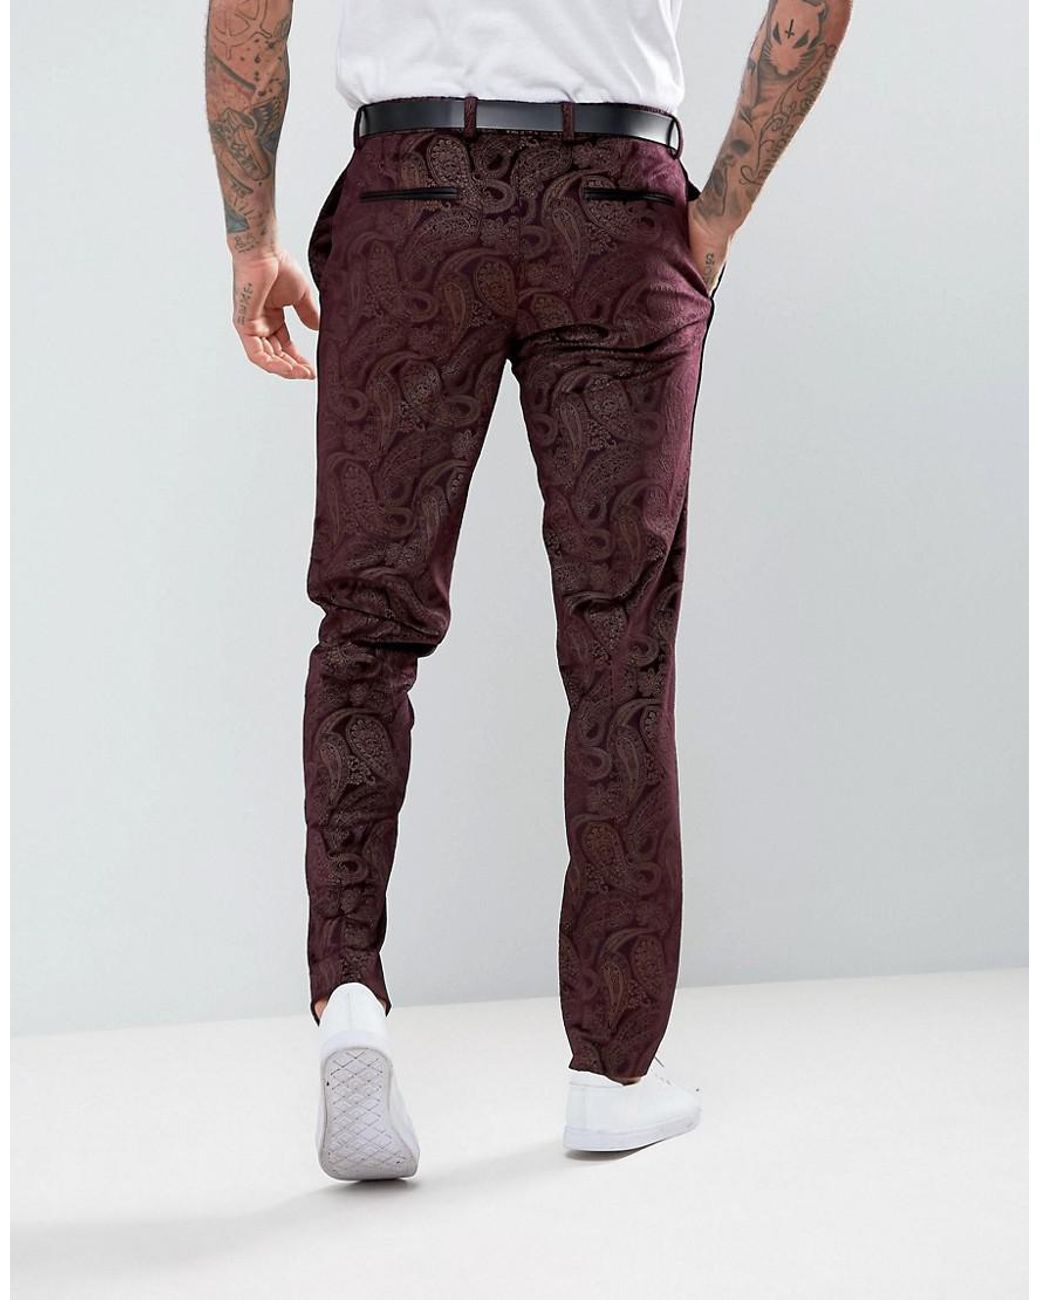 Bar III Mens SlimFit Burgundy Plaid Suit Pants Created for Macys   Macys